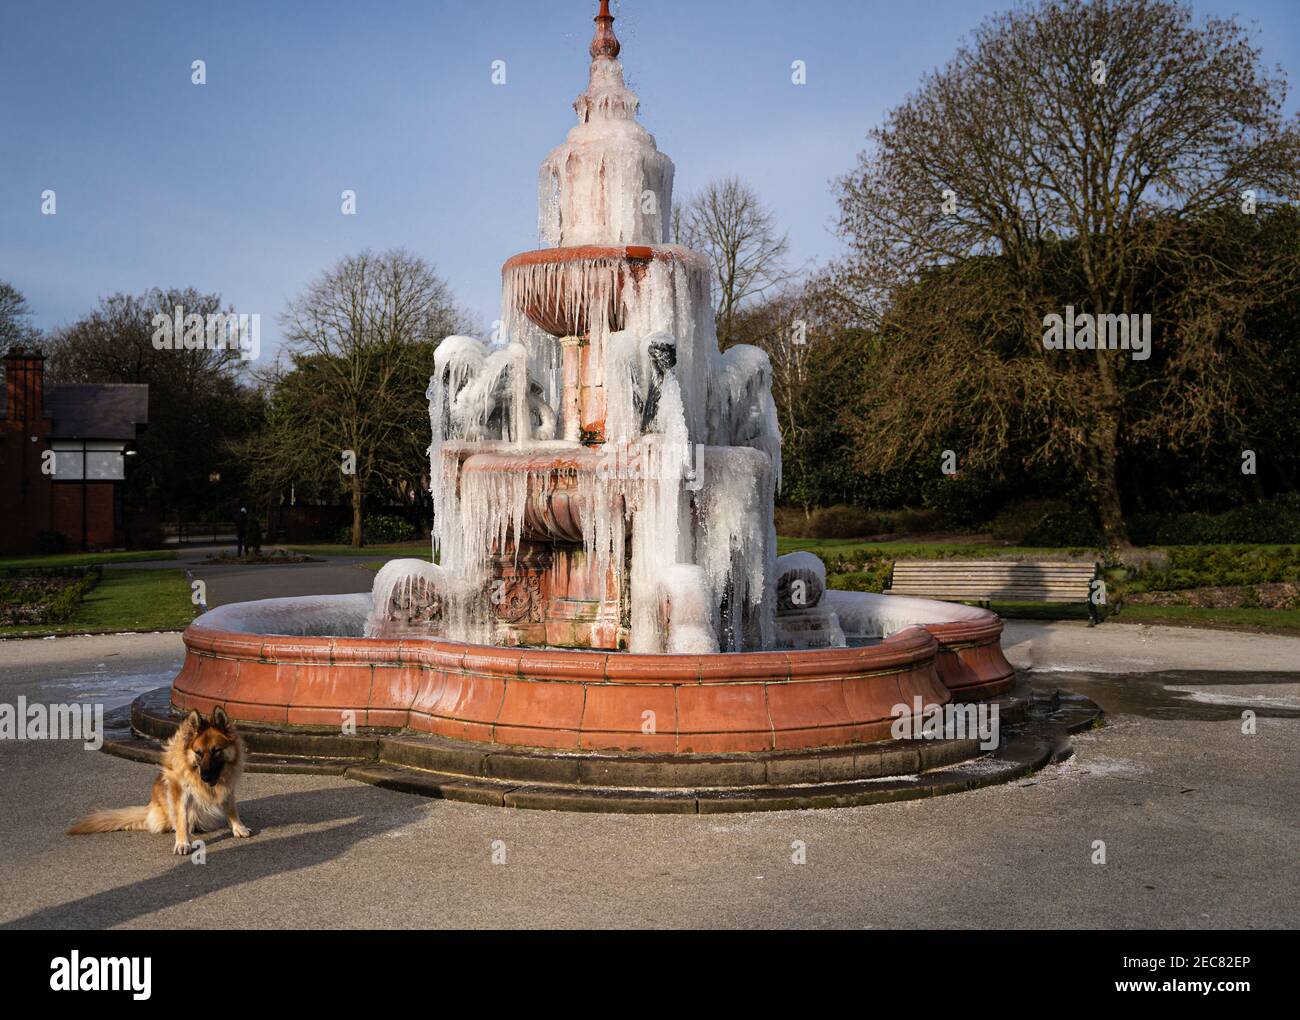 A frozen victorian fountain in Hanley Park, Stoke-on-Trent, UK Stock Photo